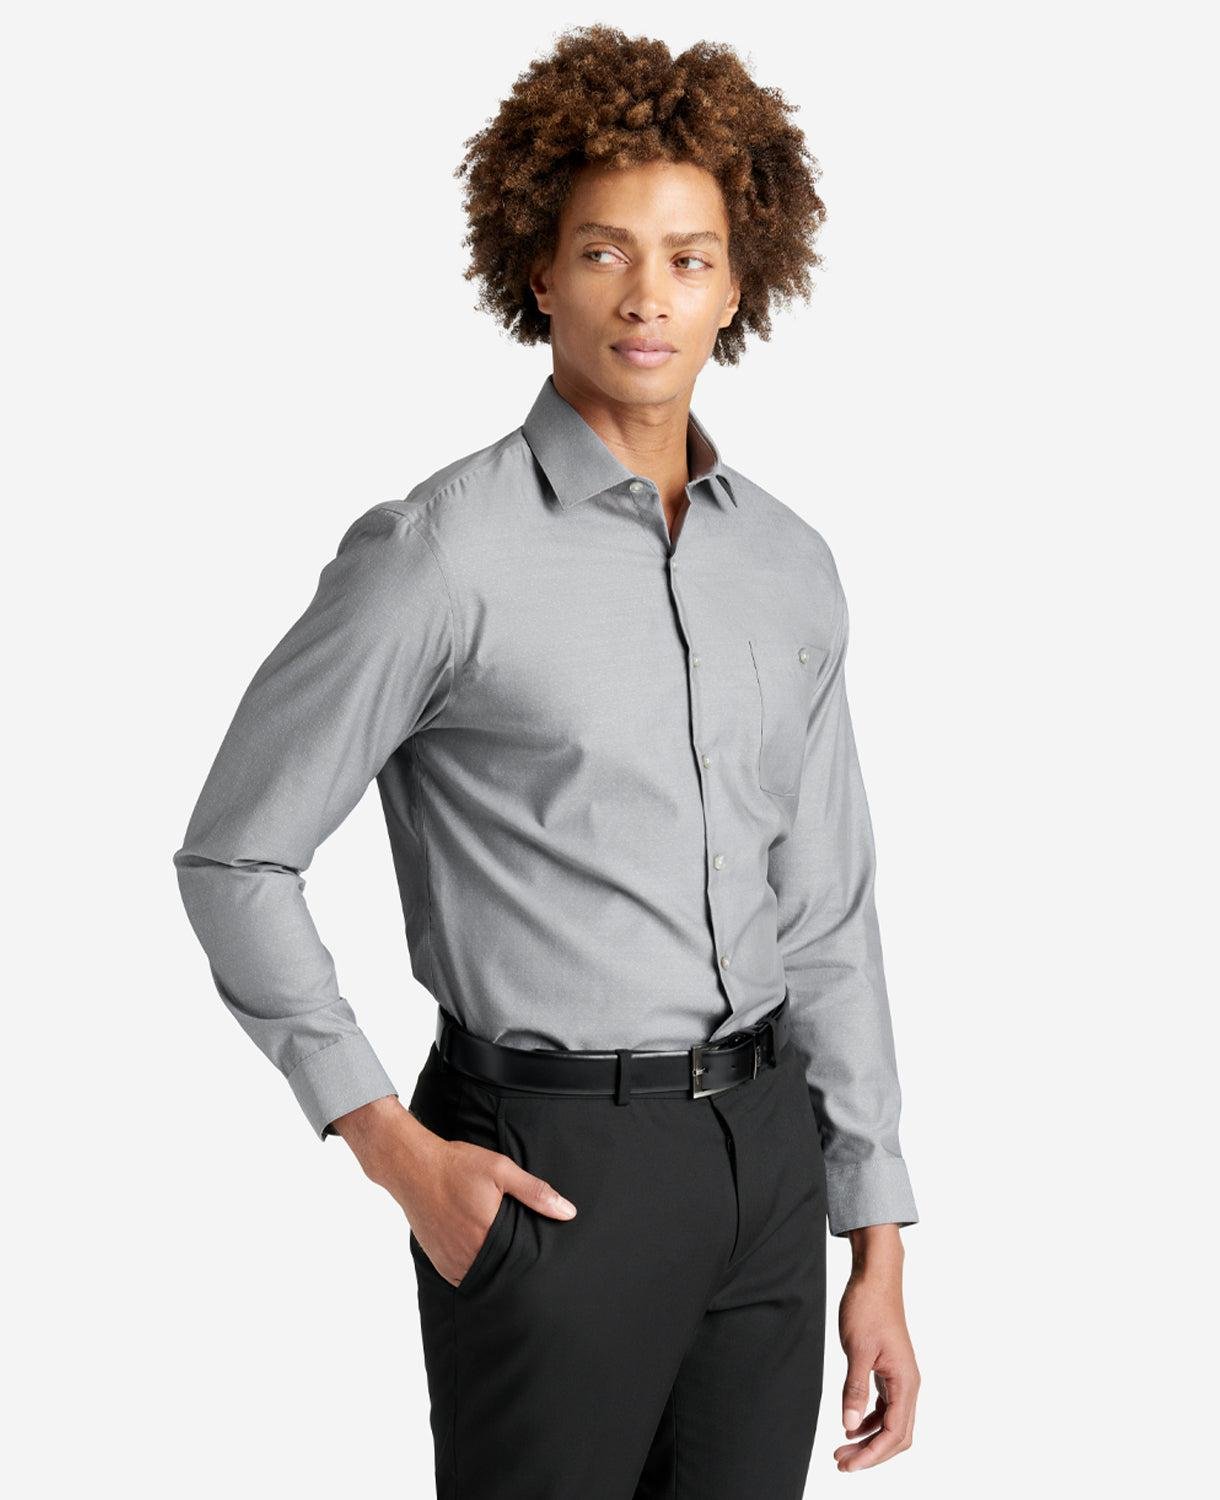 Slim Fit Kenneth Cole New York Stretch Collar Solid Dress Shirt by KENNETH COLE